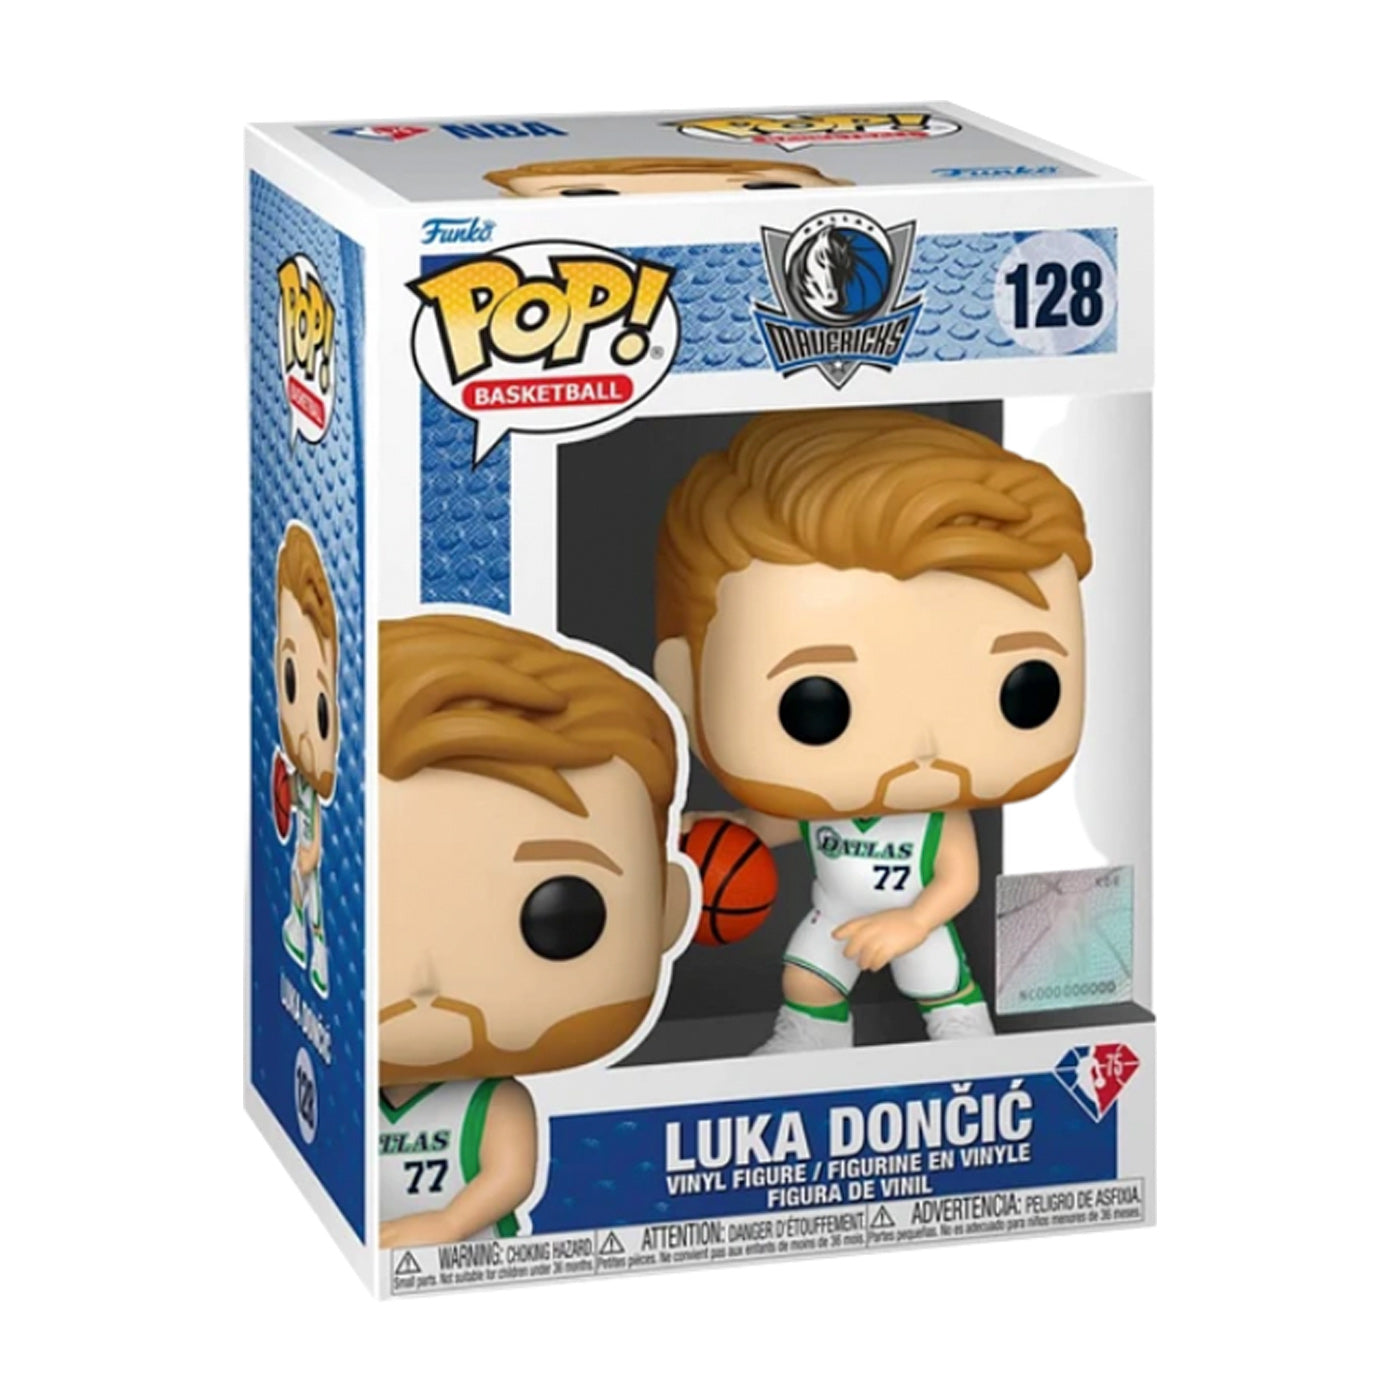 Funko Pop Basketball: Luka Doncic (128)